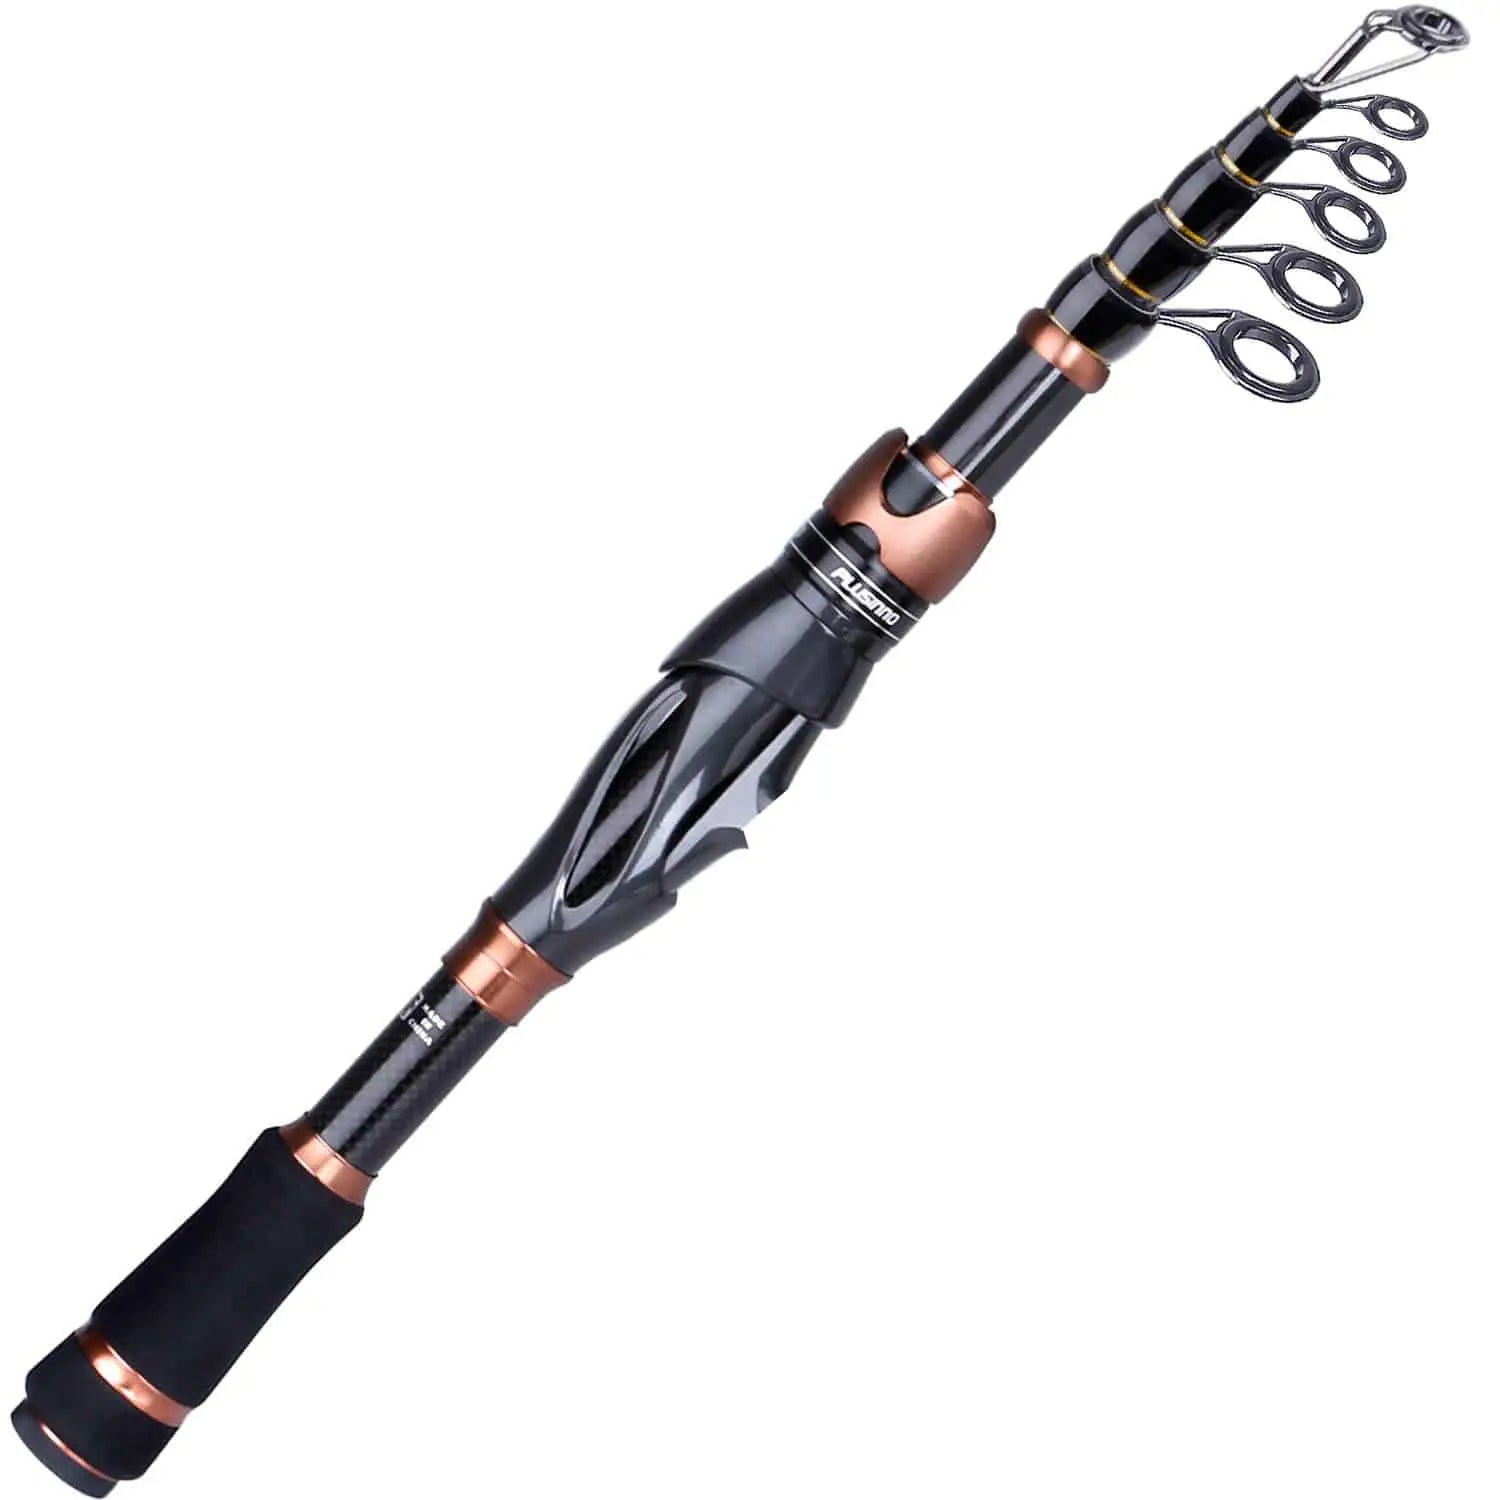 Telescopic Fishing Rod – Plusinno